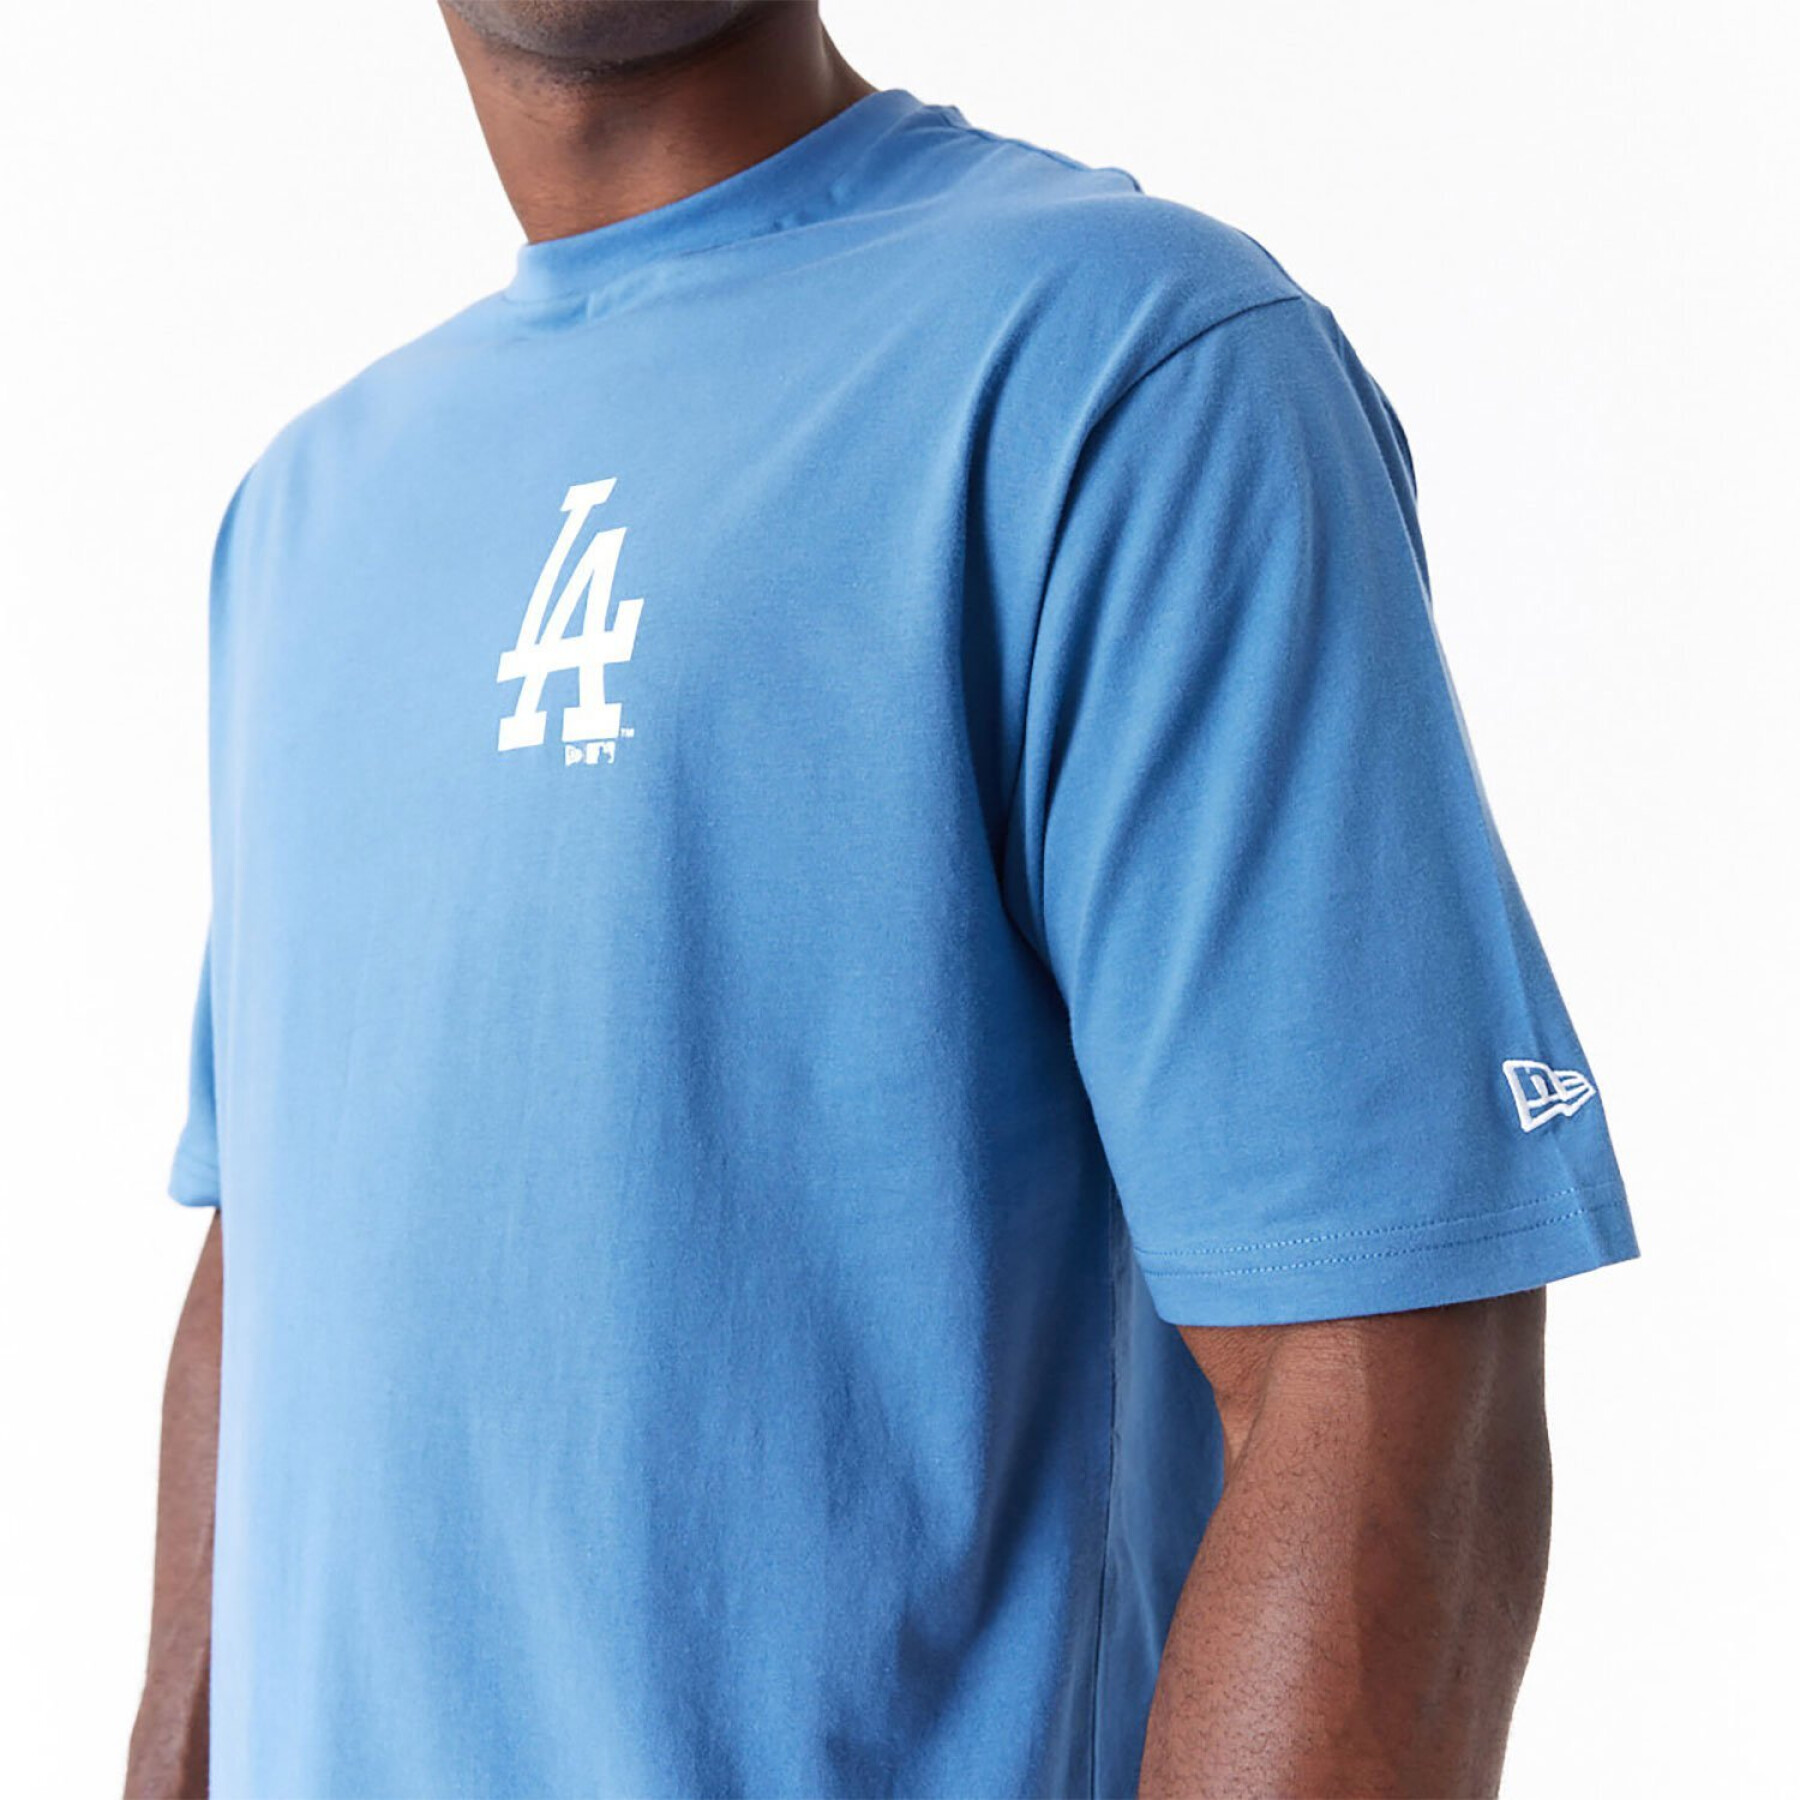 Camiseta oversize Los Angeles Dodgers MLB World Series